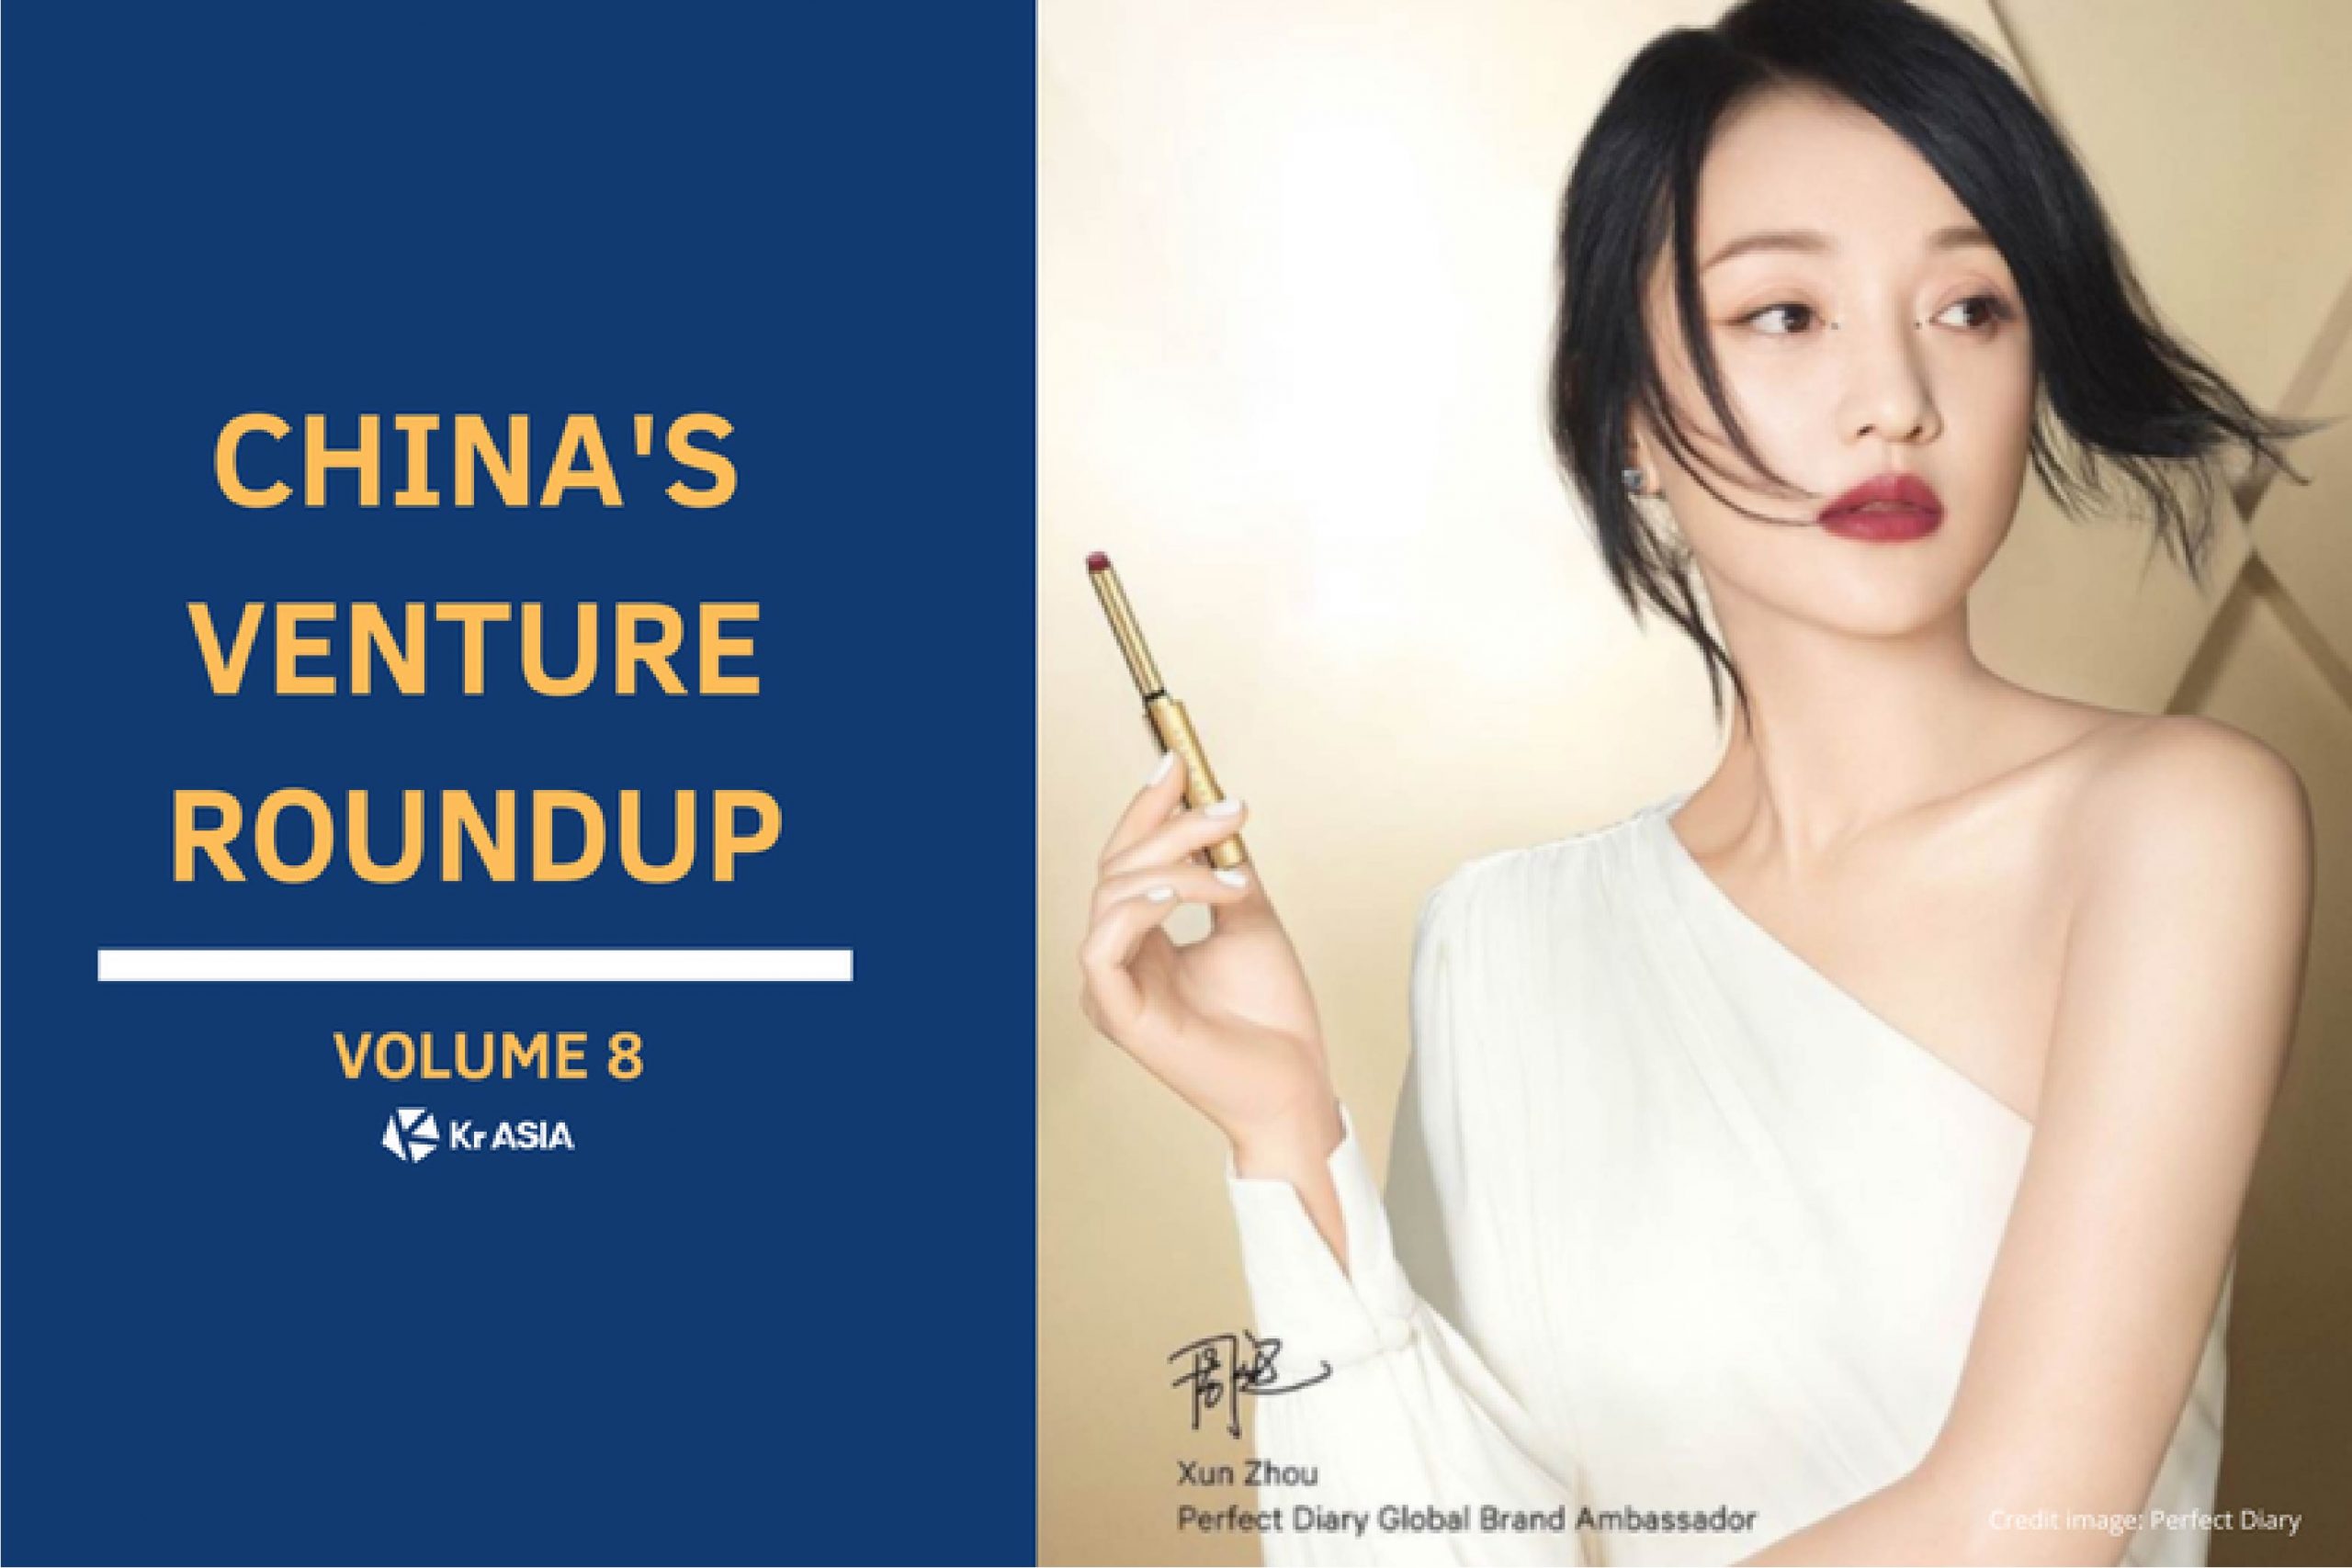 History-making IPO for China’s first beauty unicorn Yatsen Holding | China’s Venture Roundup Volume 8